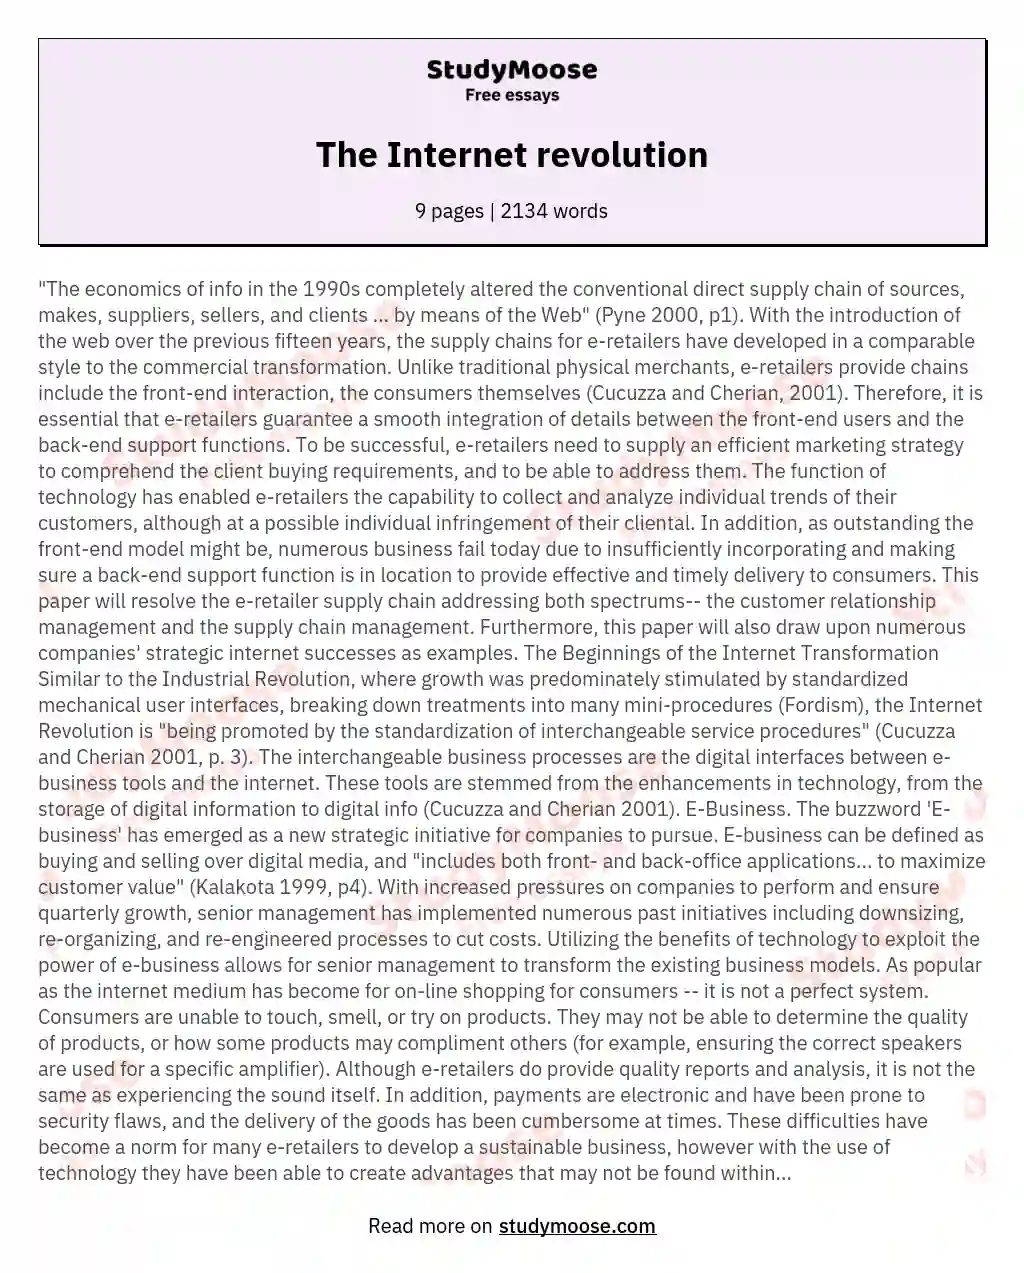 The Internet revolution